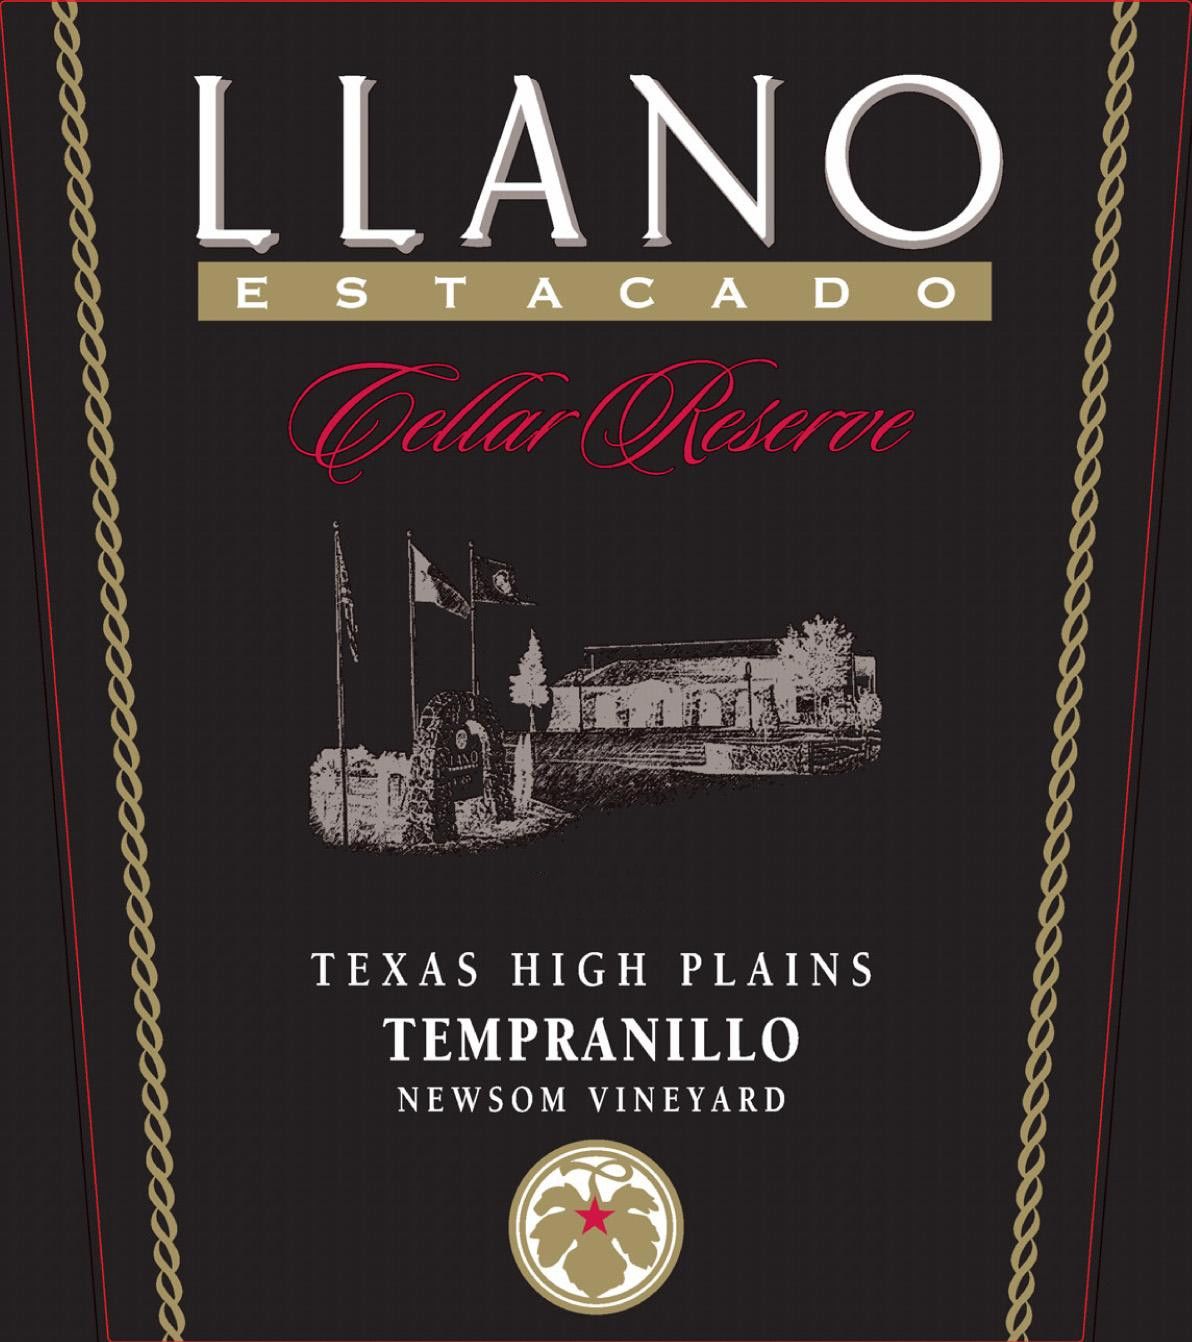 llano wine tour